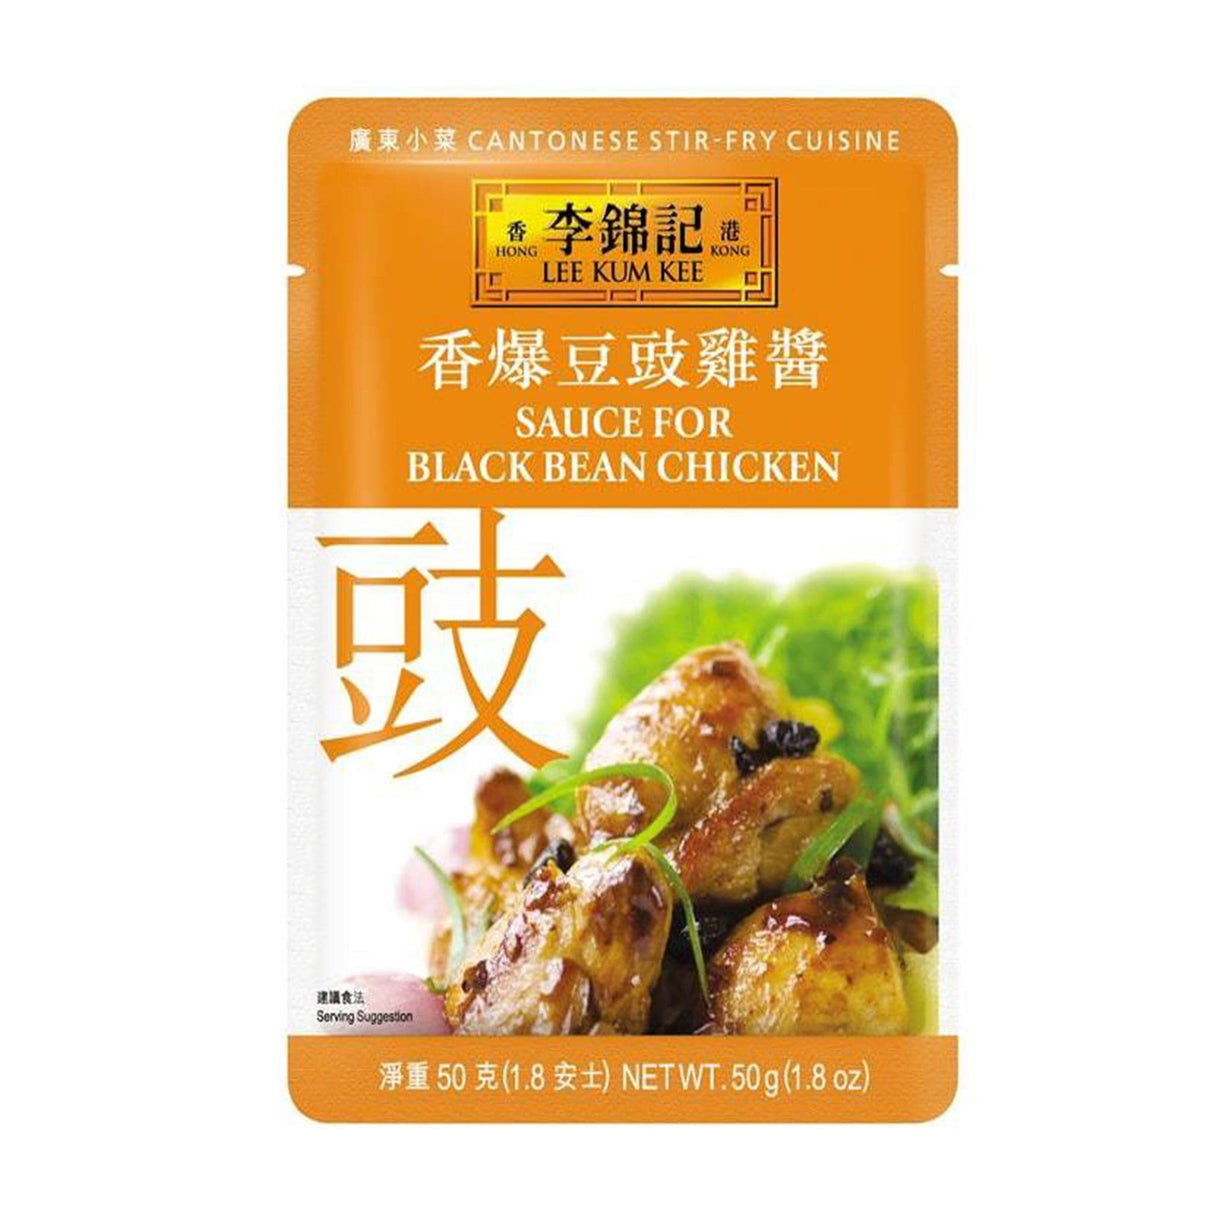 Lee Kum Kee Sauce For Black Bean Chicken